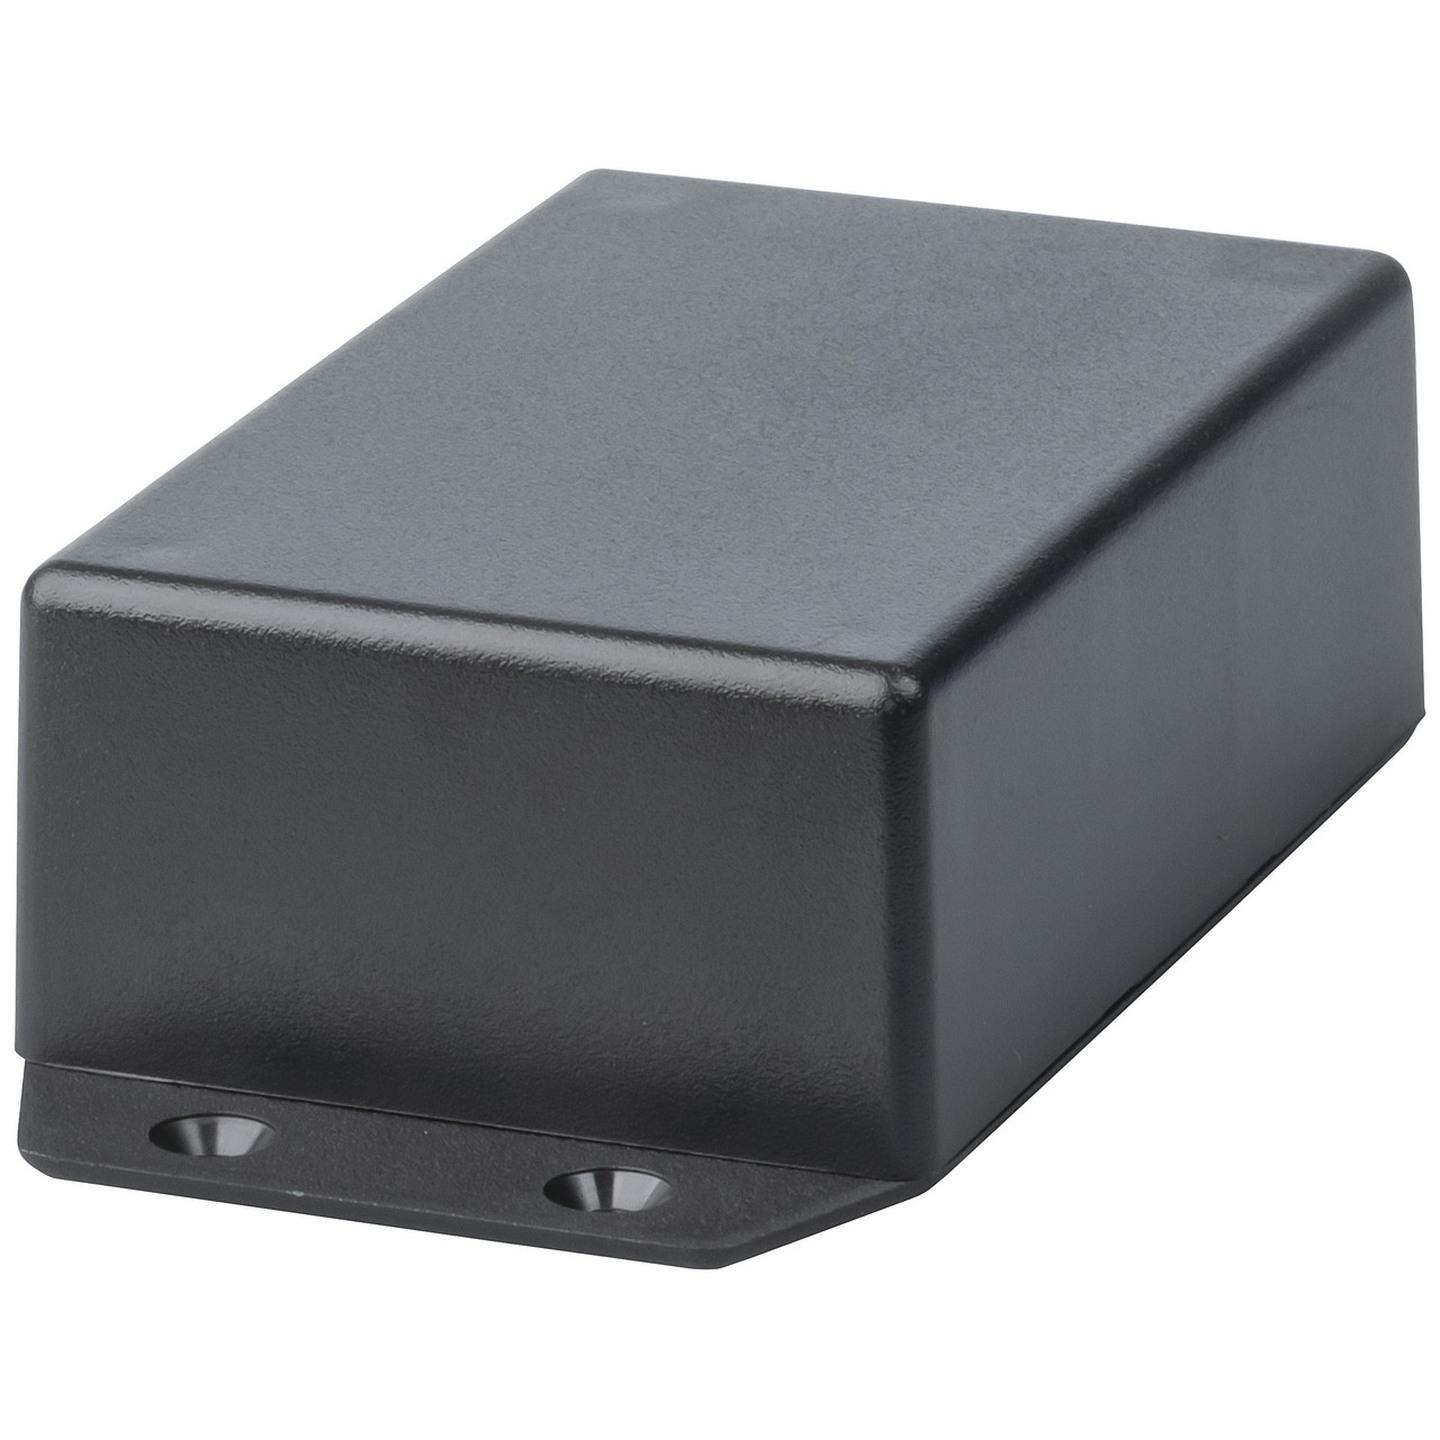 Jiffy Box - Black with mounting flange - 83X54X31 - UB5